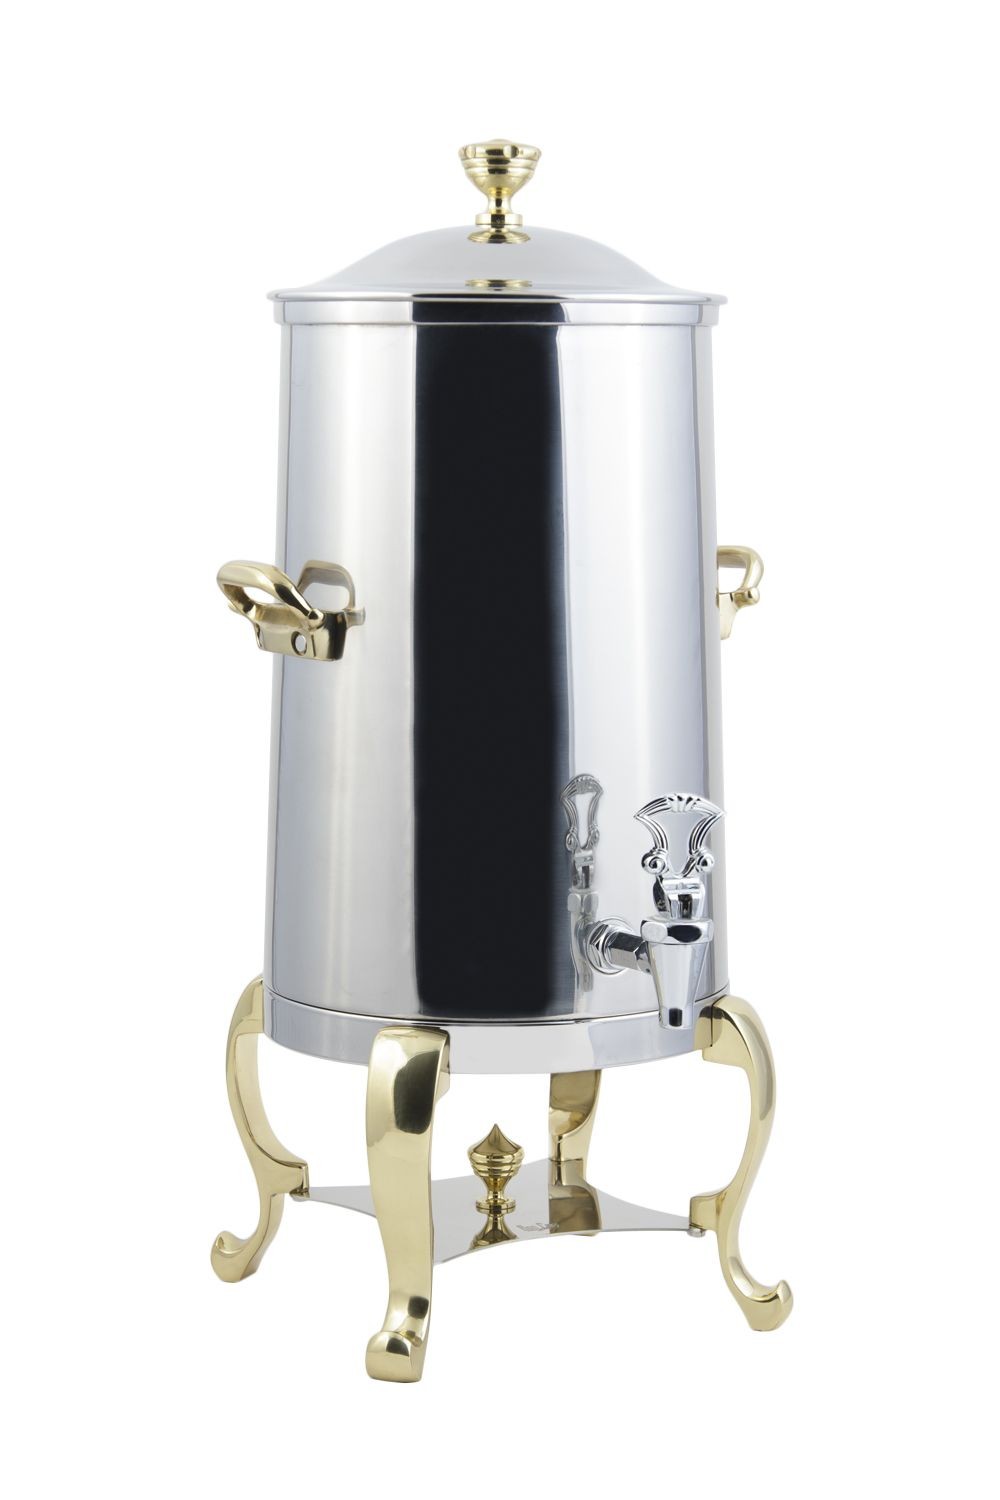 Bon Chef 49003 Roman Insulated Coffee Urn with Brass Trim, 3 Gallon